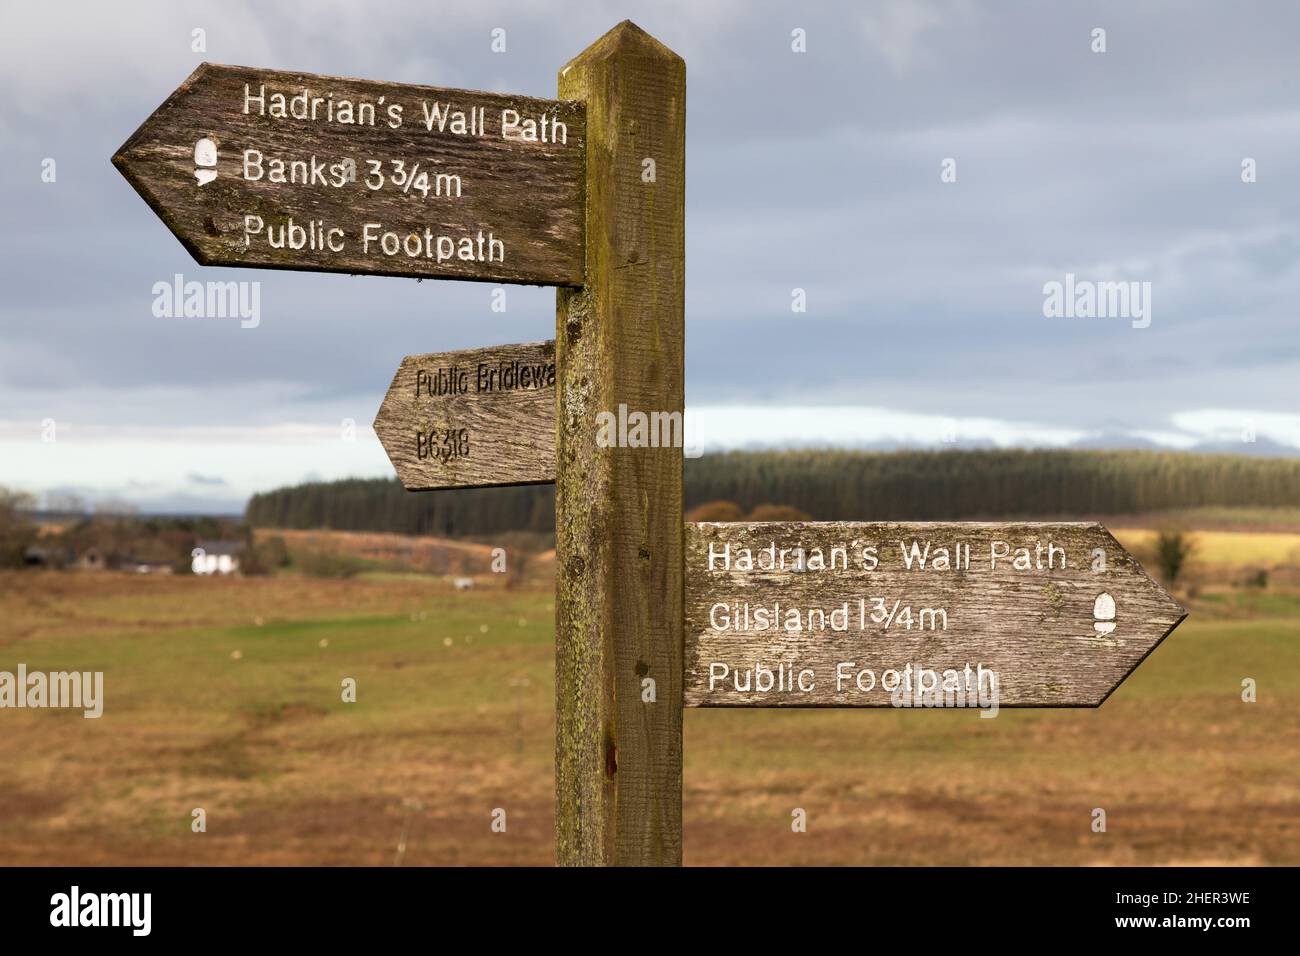 Signpost for Hadrian's Wall Path at Birdoswald in Cumbria, England. The footpath runs alongside Hadrian's Wall. Stock Photo